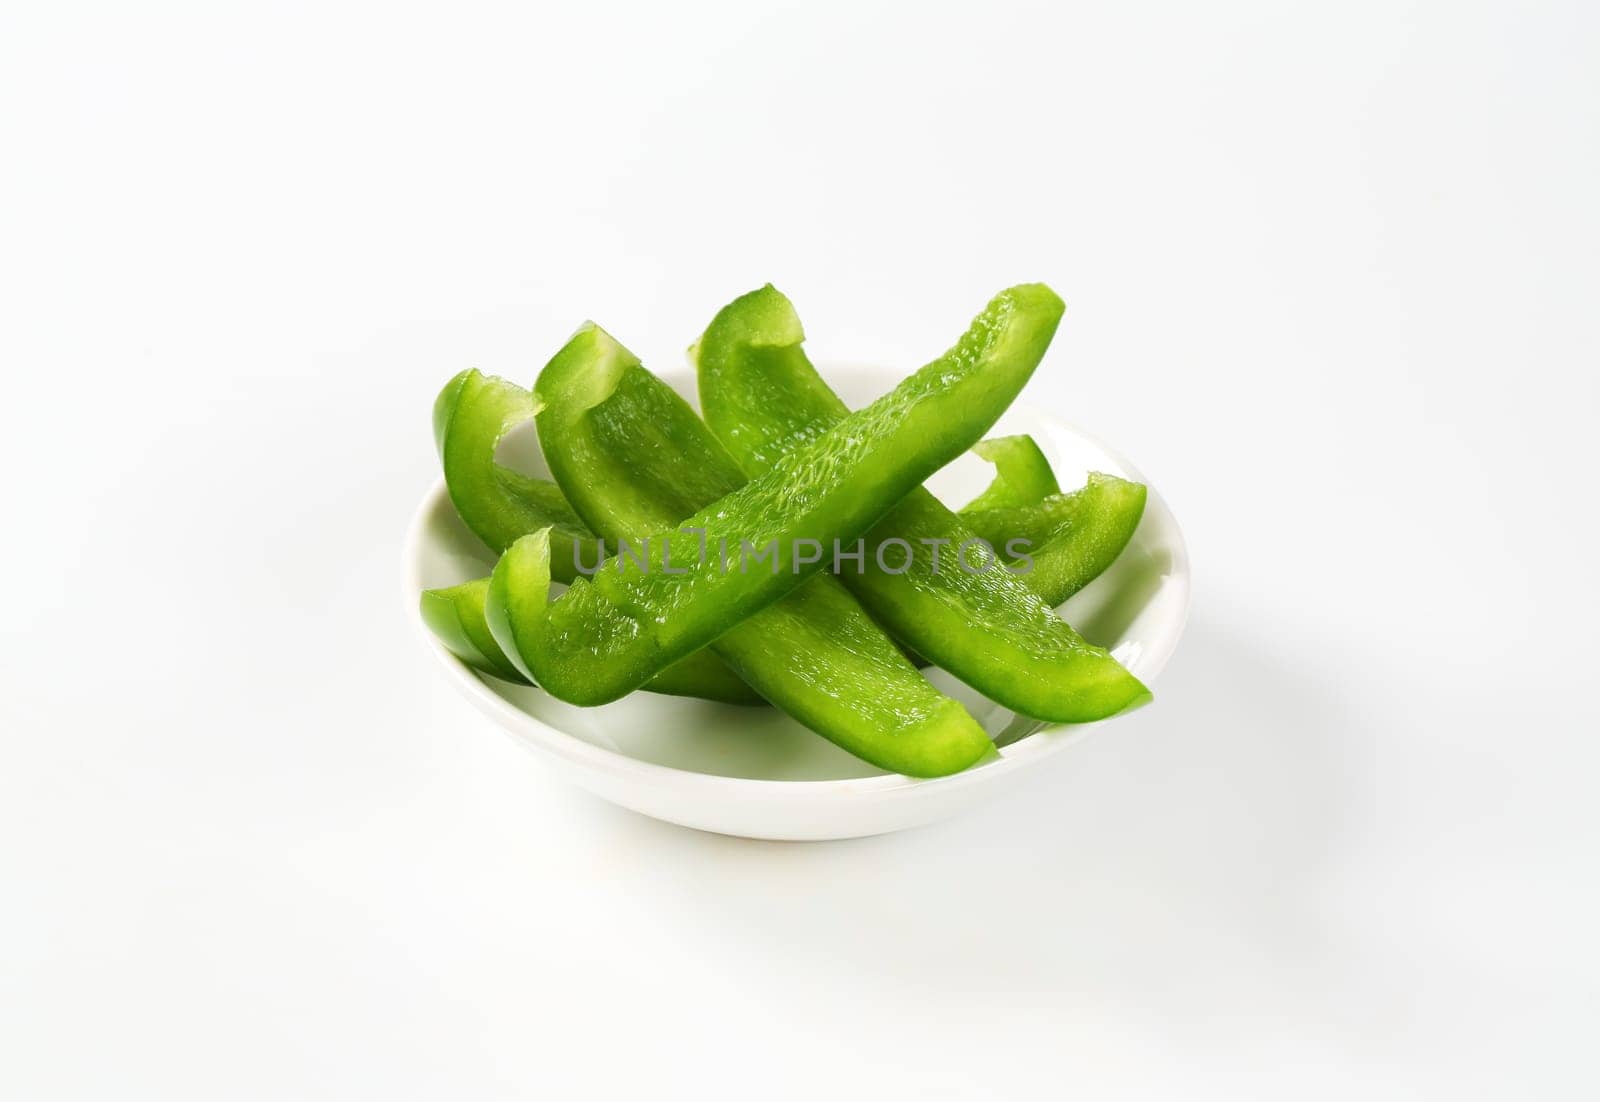 Thin slices of fresh green pepper in white bowl